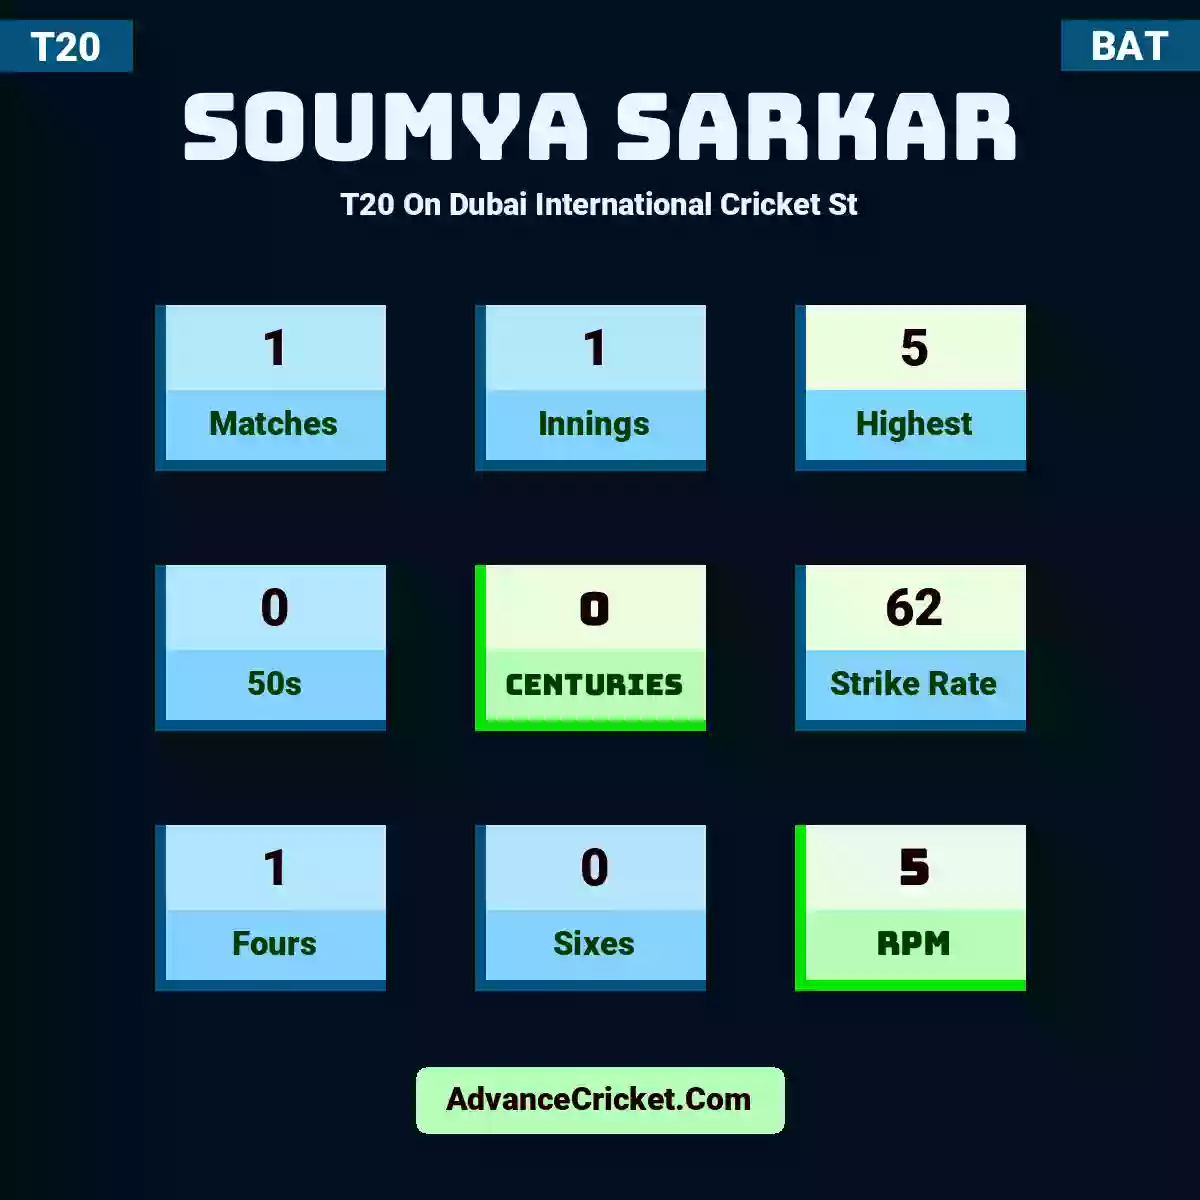 Soumya Sarkar T20  On Dubai International Cricket St, Soumya Sarkar played 1 matches, scored 5 runs as highest, 0 half-centuries, and 0 centuries, with a strike rate of 62. S.Sarkar hit 1 fours and 0 sixes, with an RPM of 5.